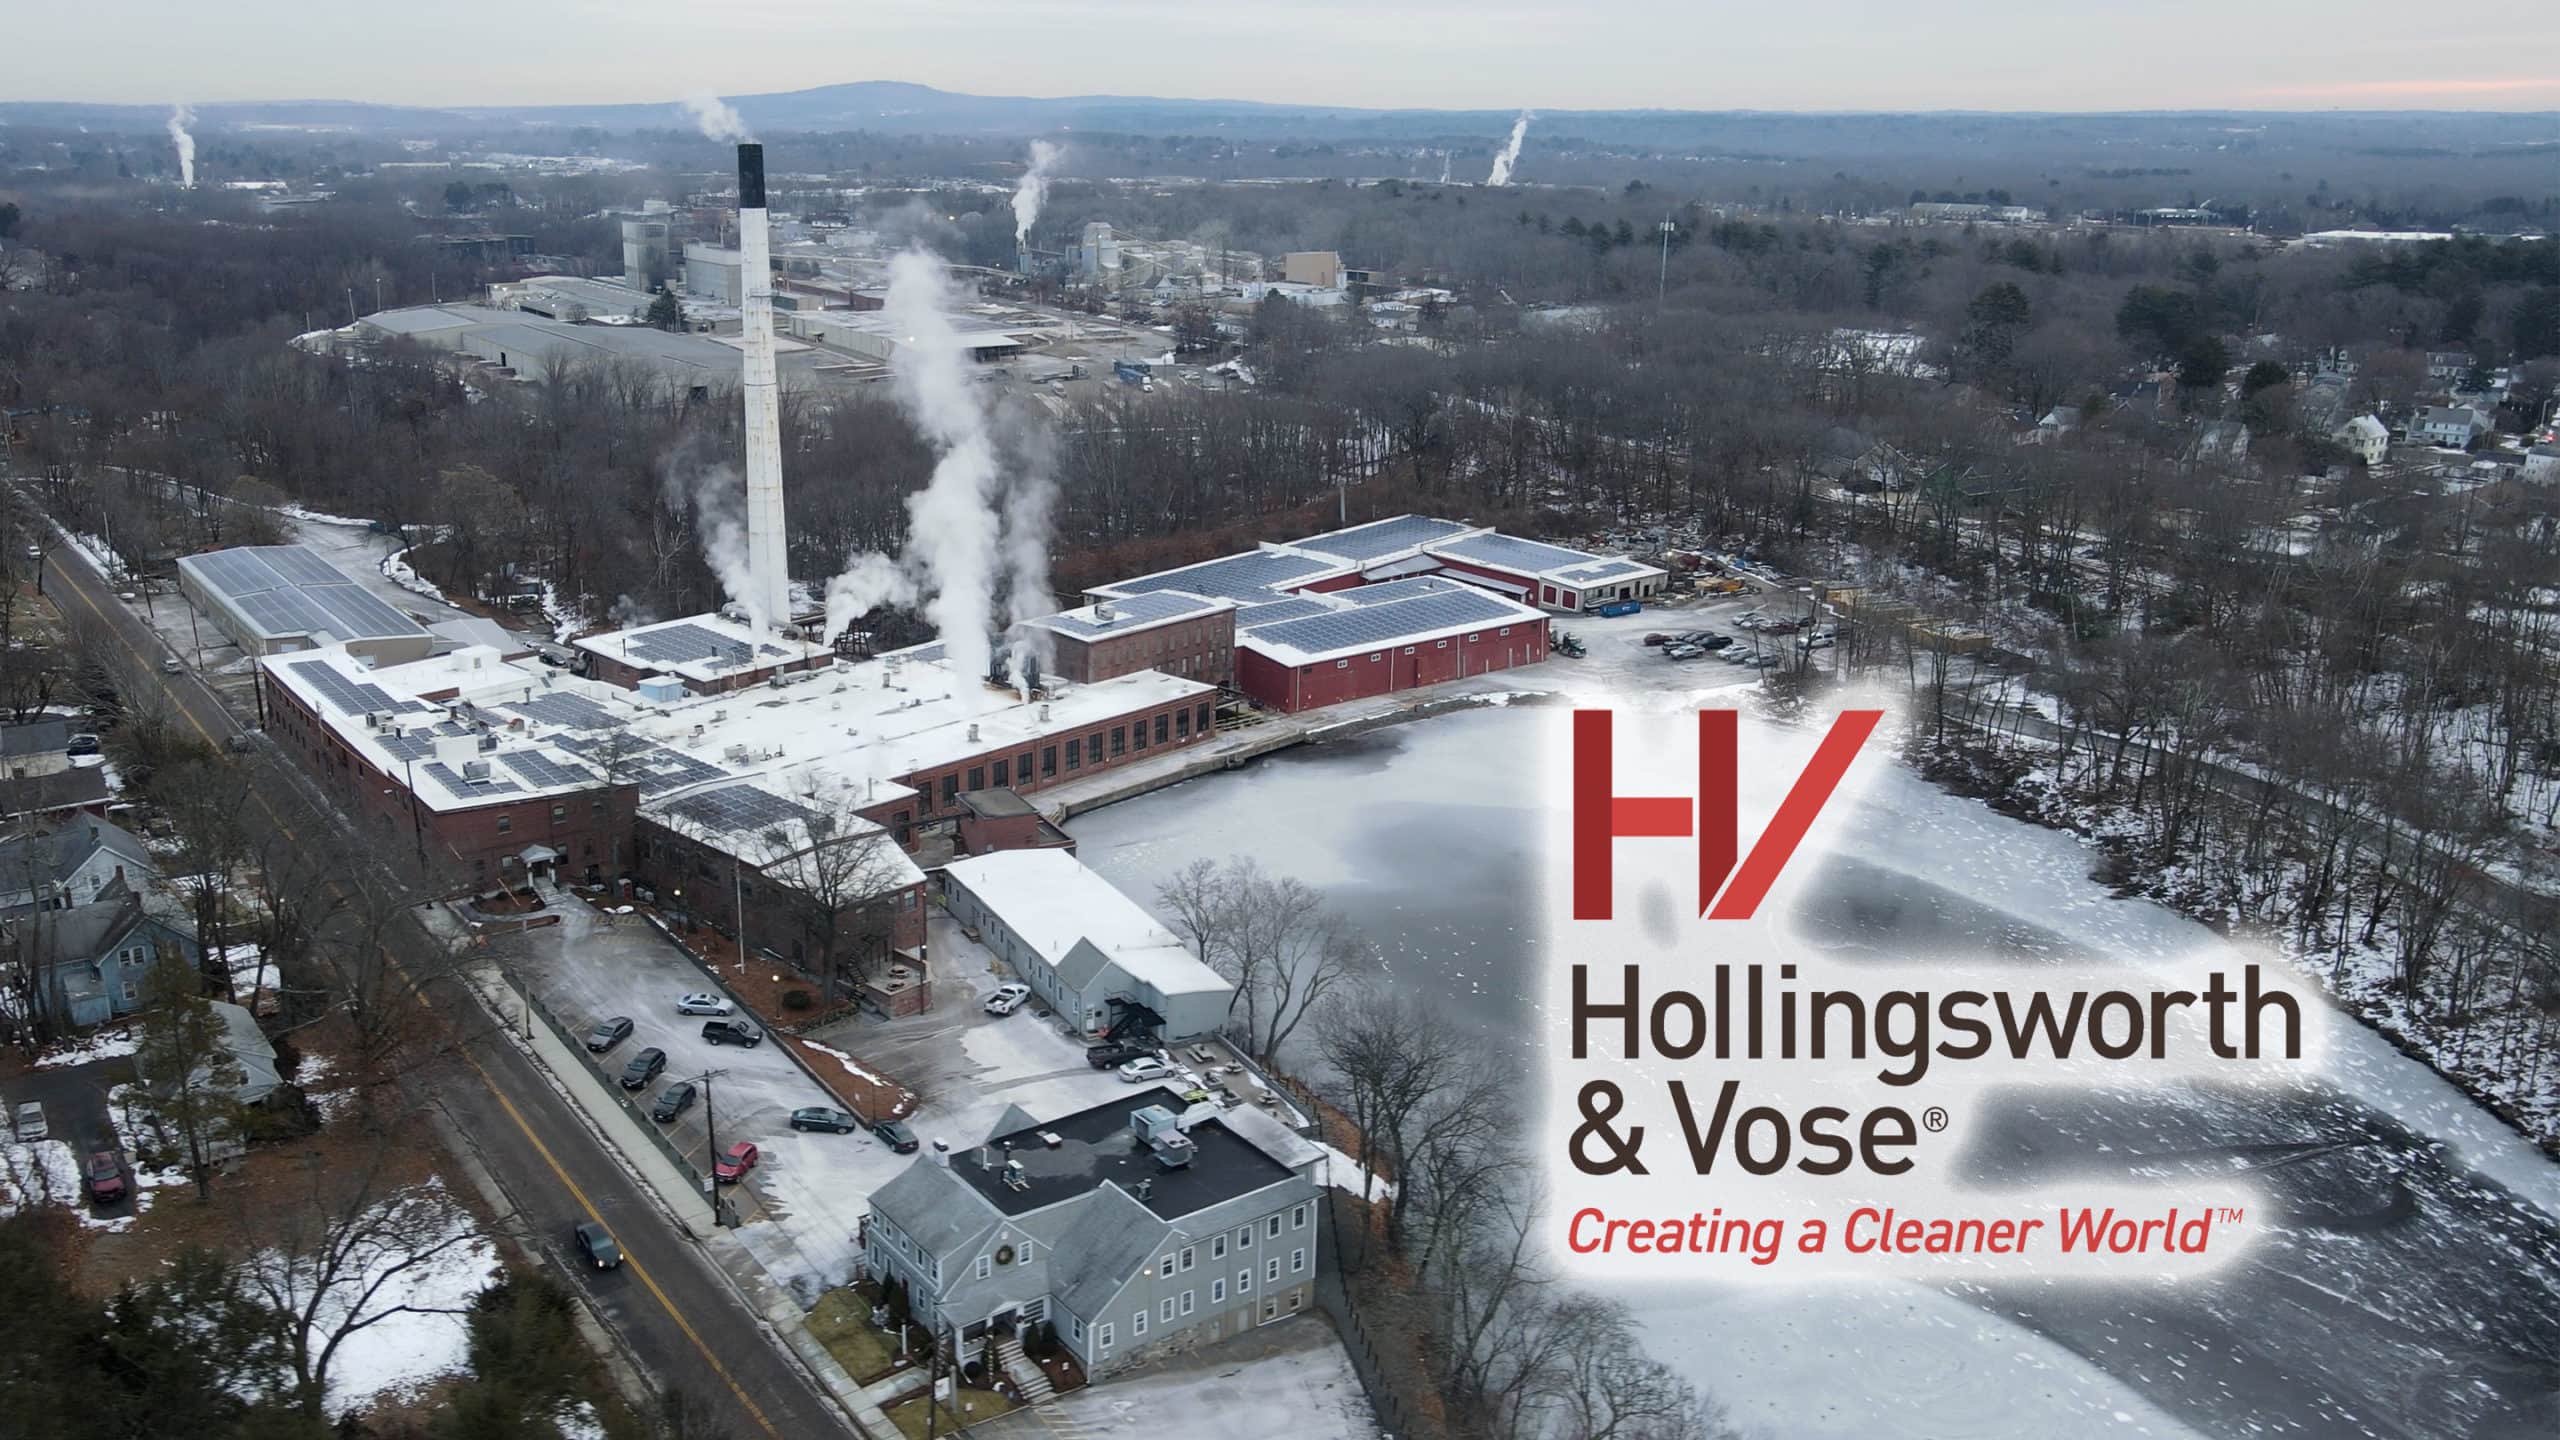 Creating a cleaner world | hollingsworth & vose